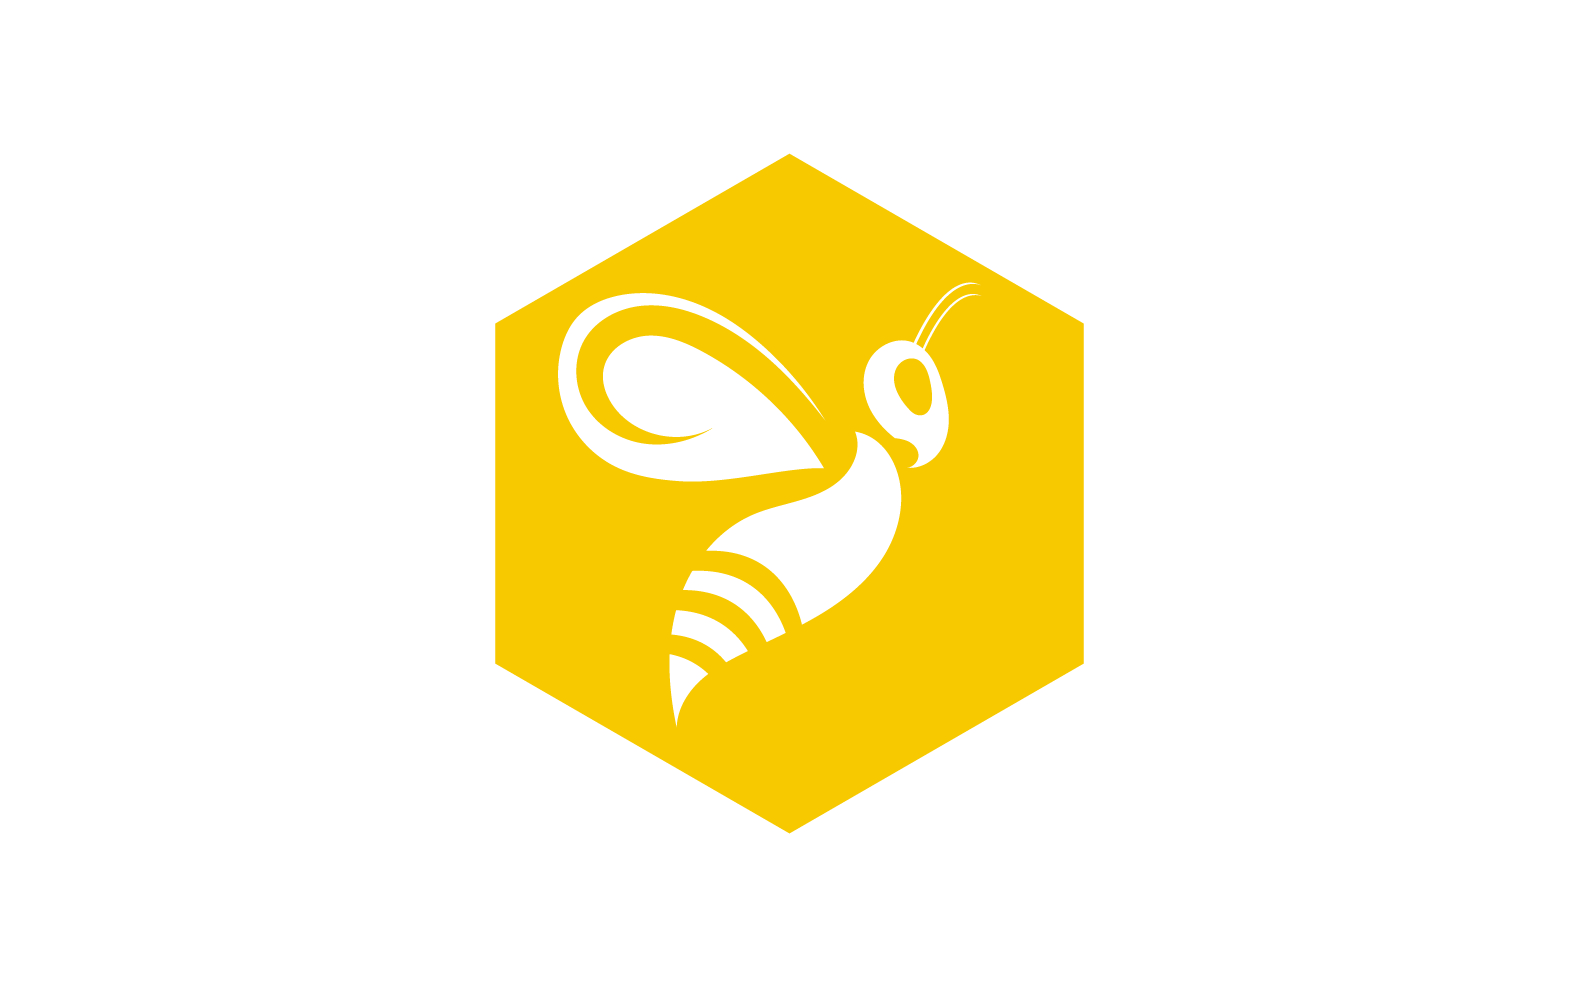 Bee honeycomb animal logo design template vector v11